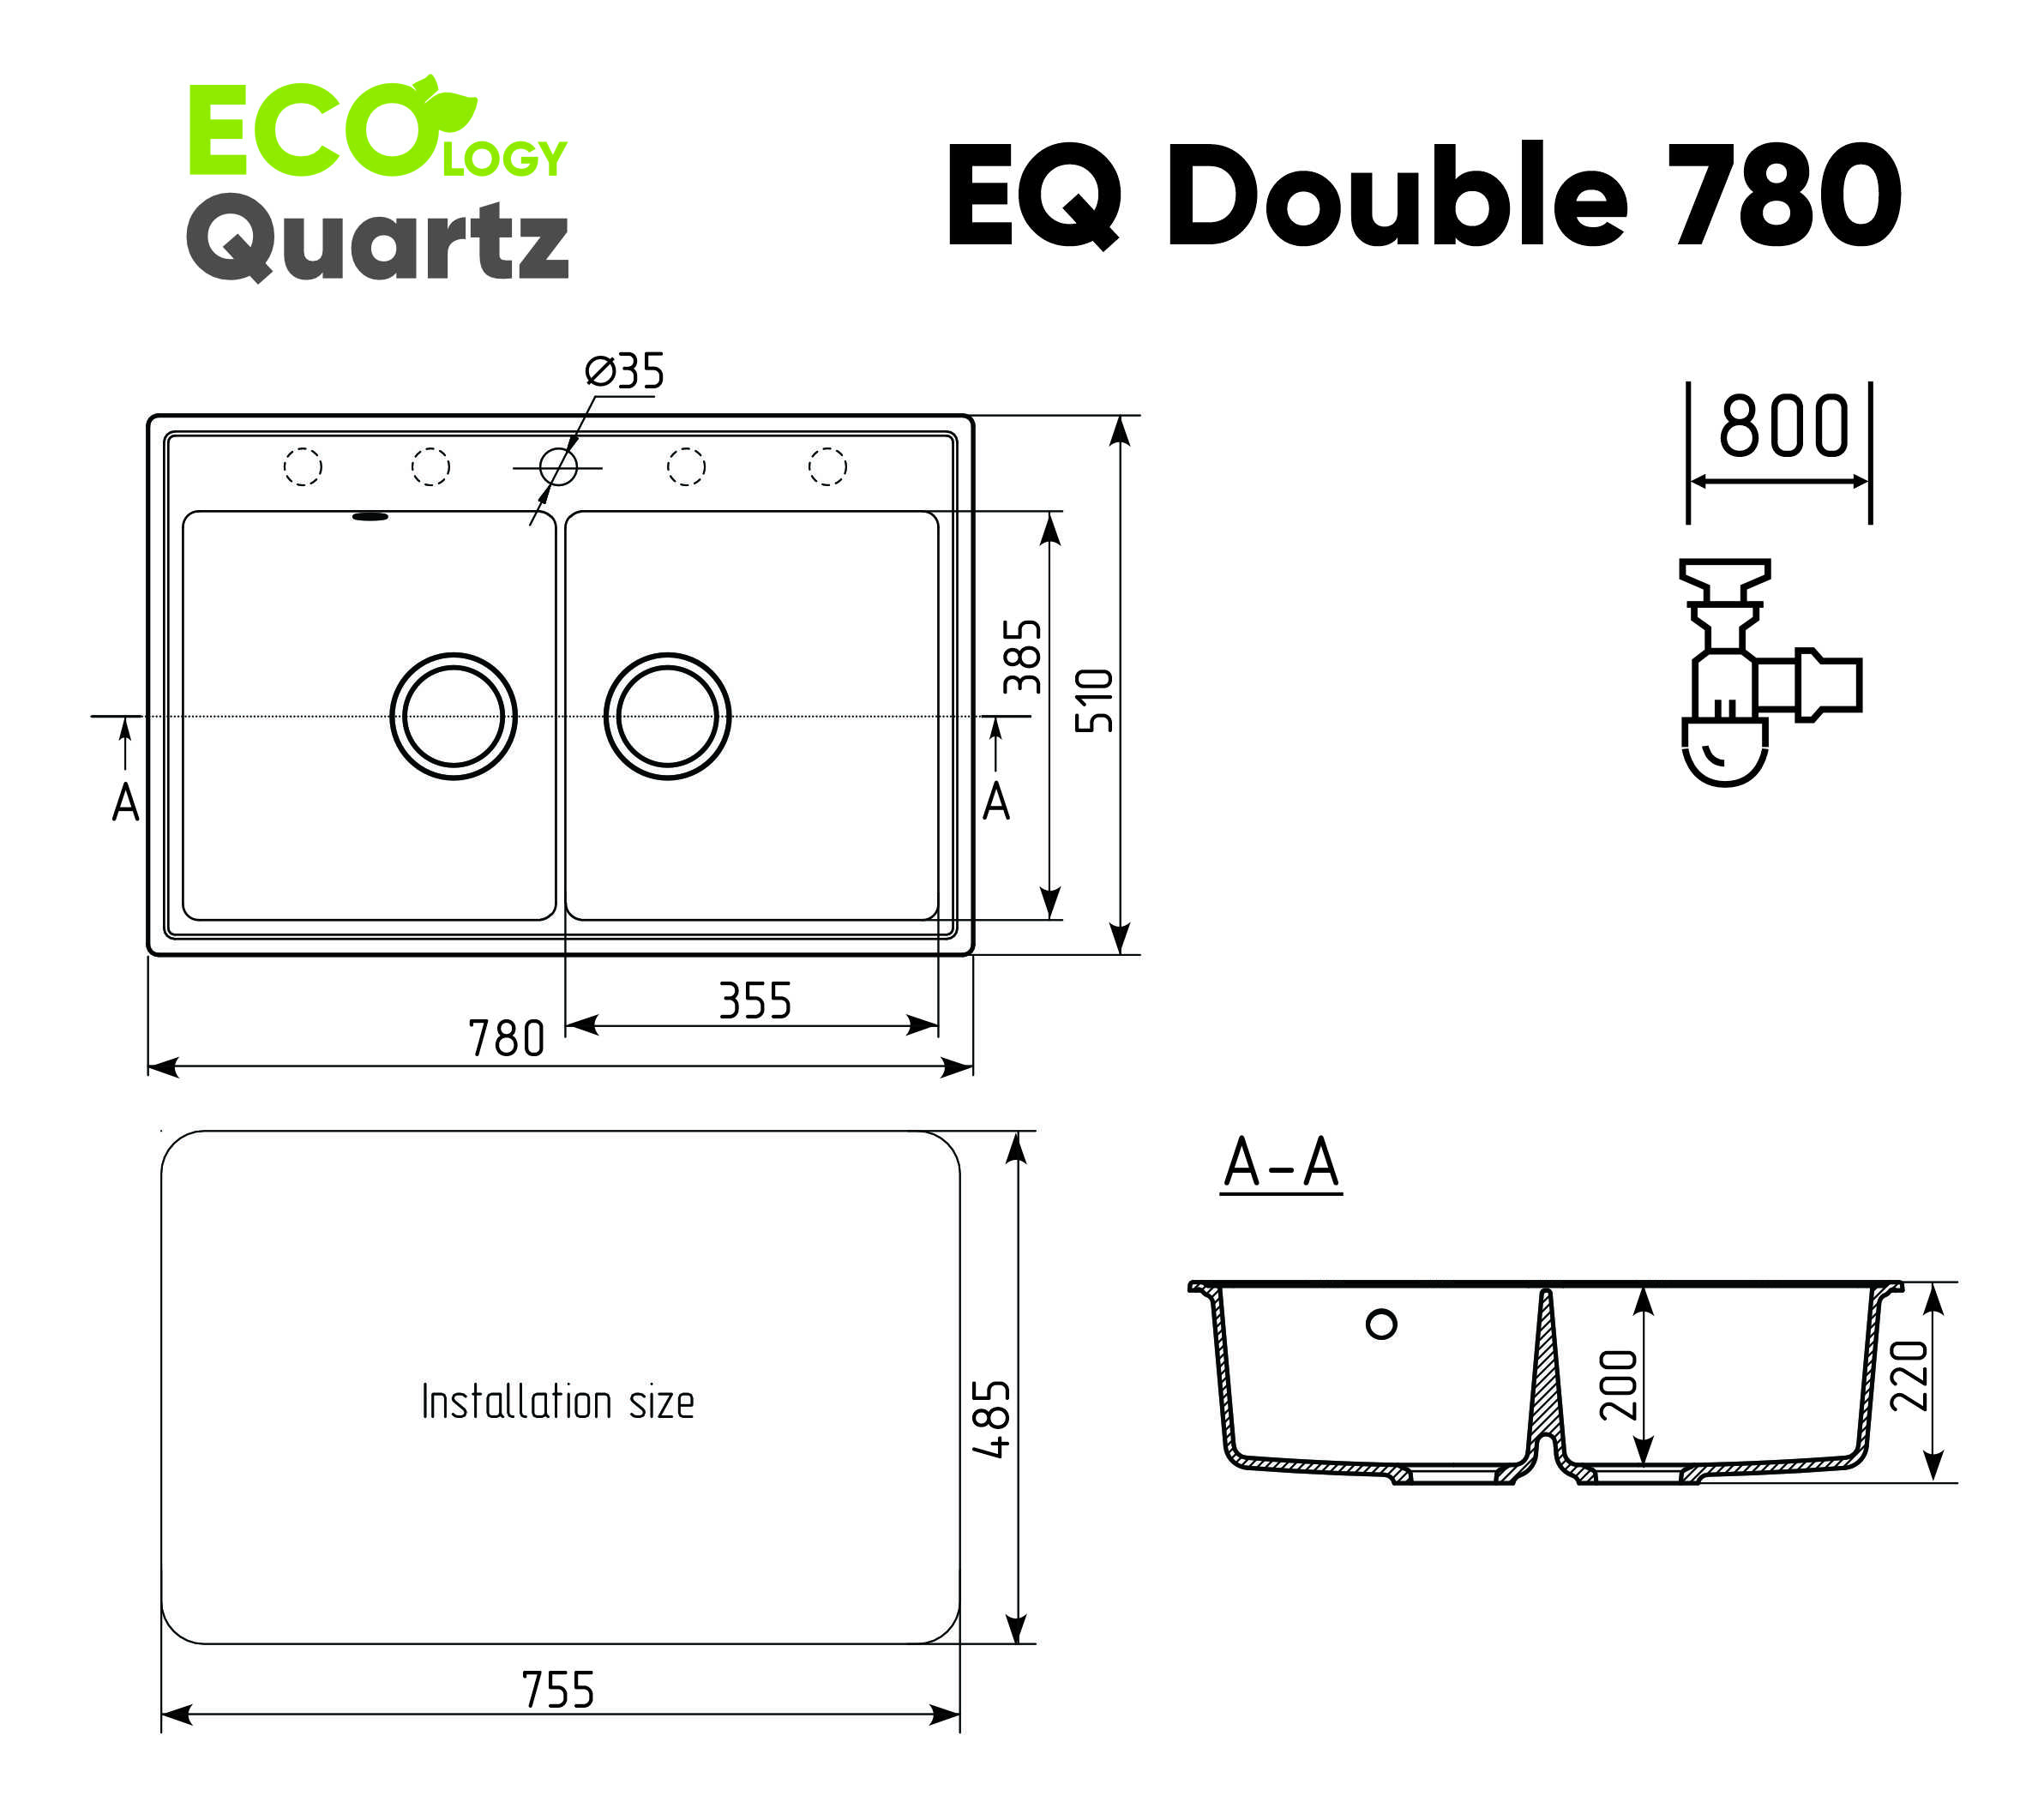 Ecology Quartz EQ Double 780.jpg